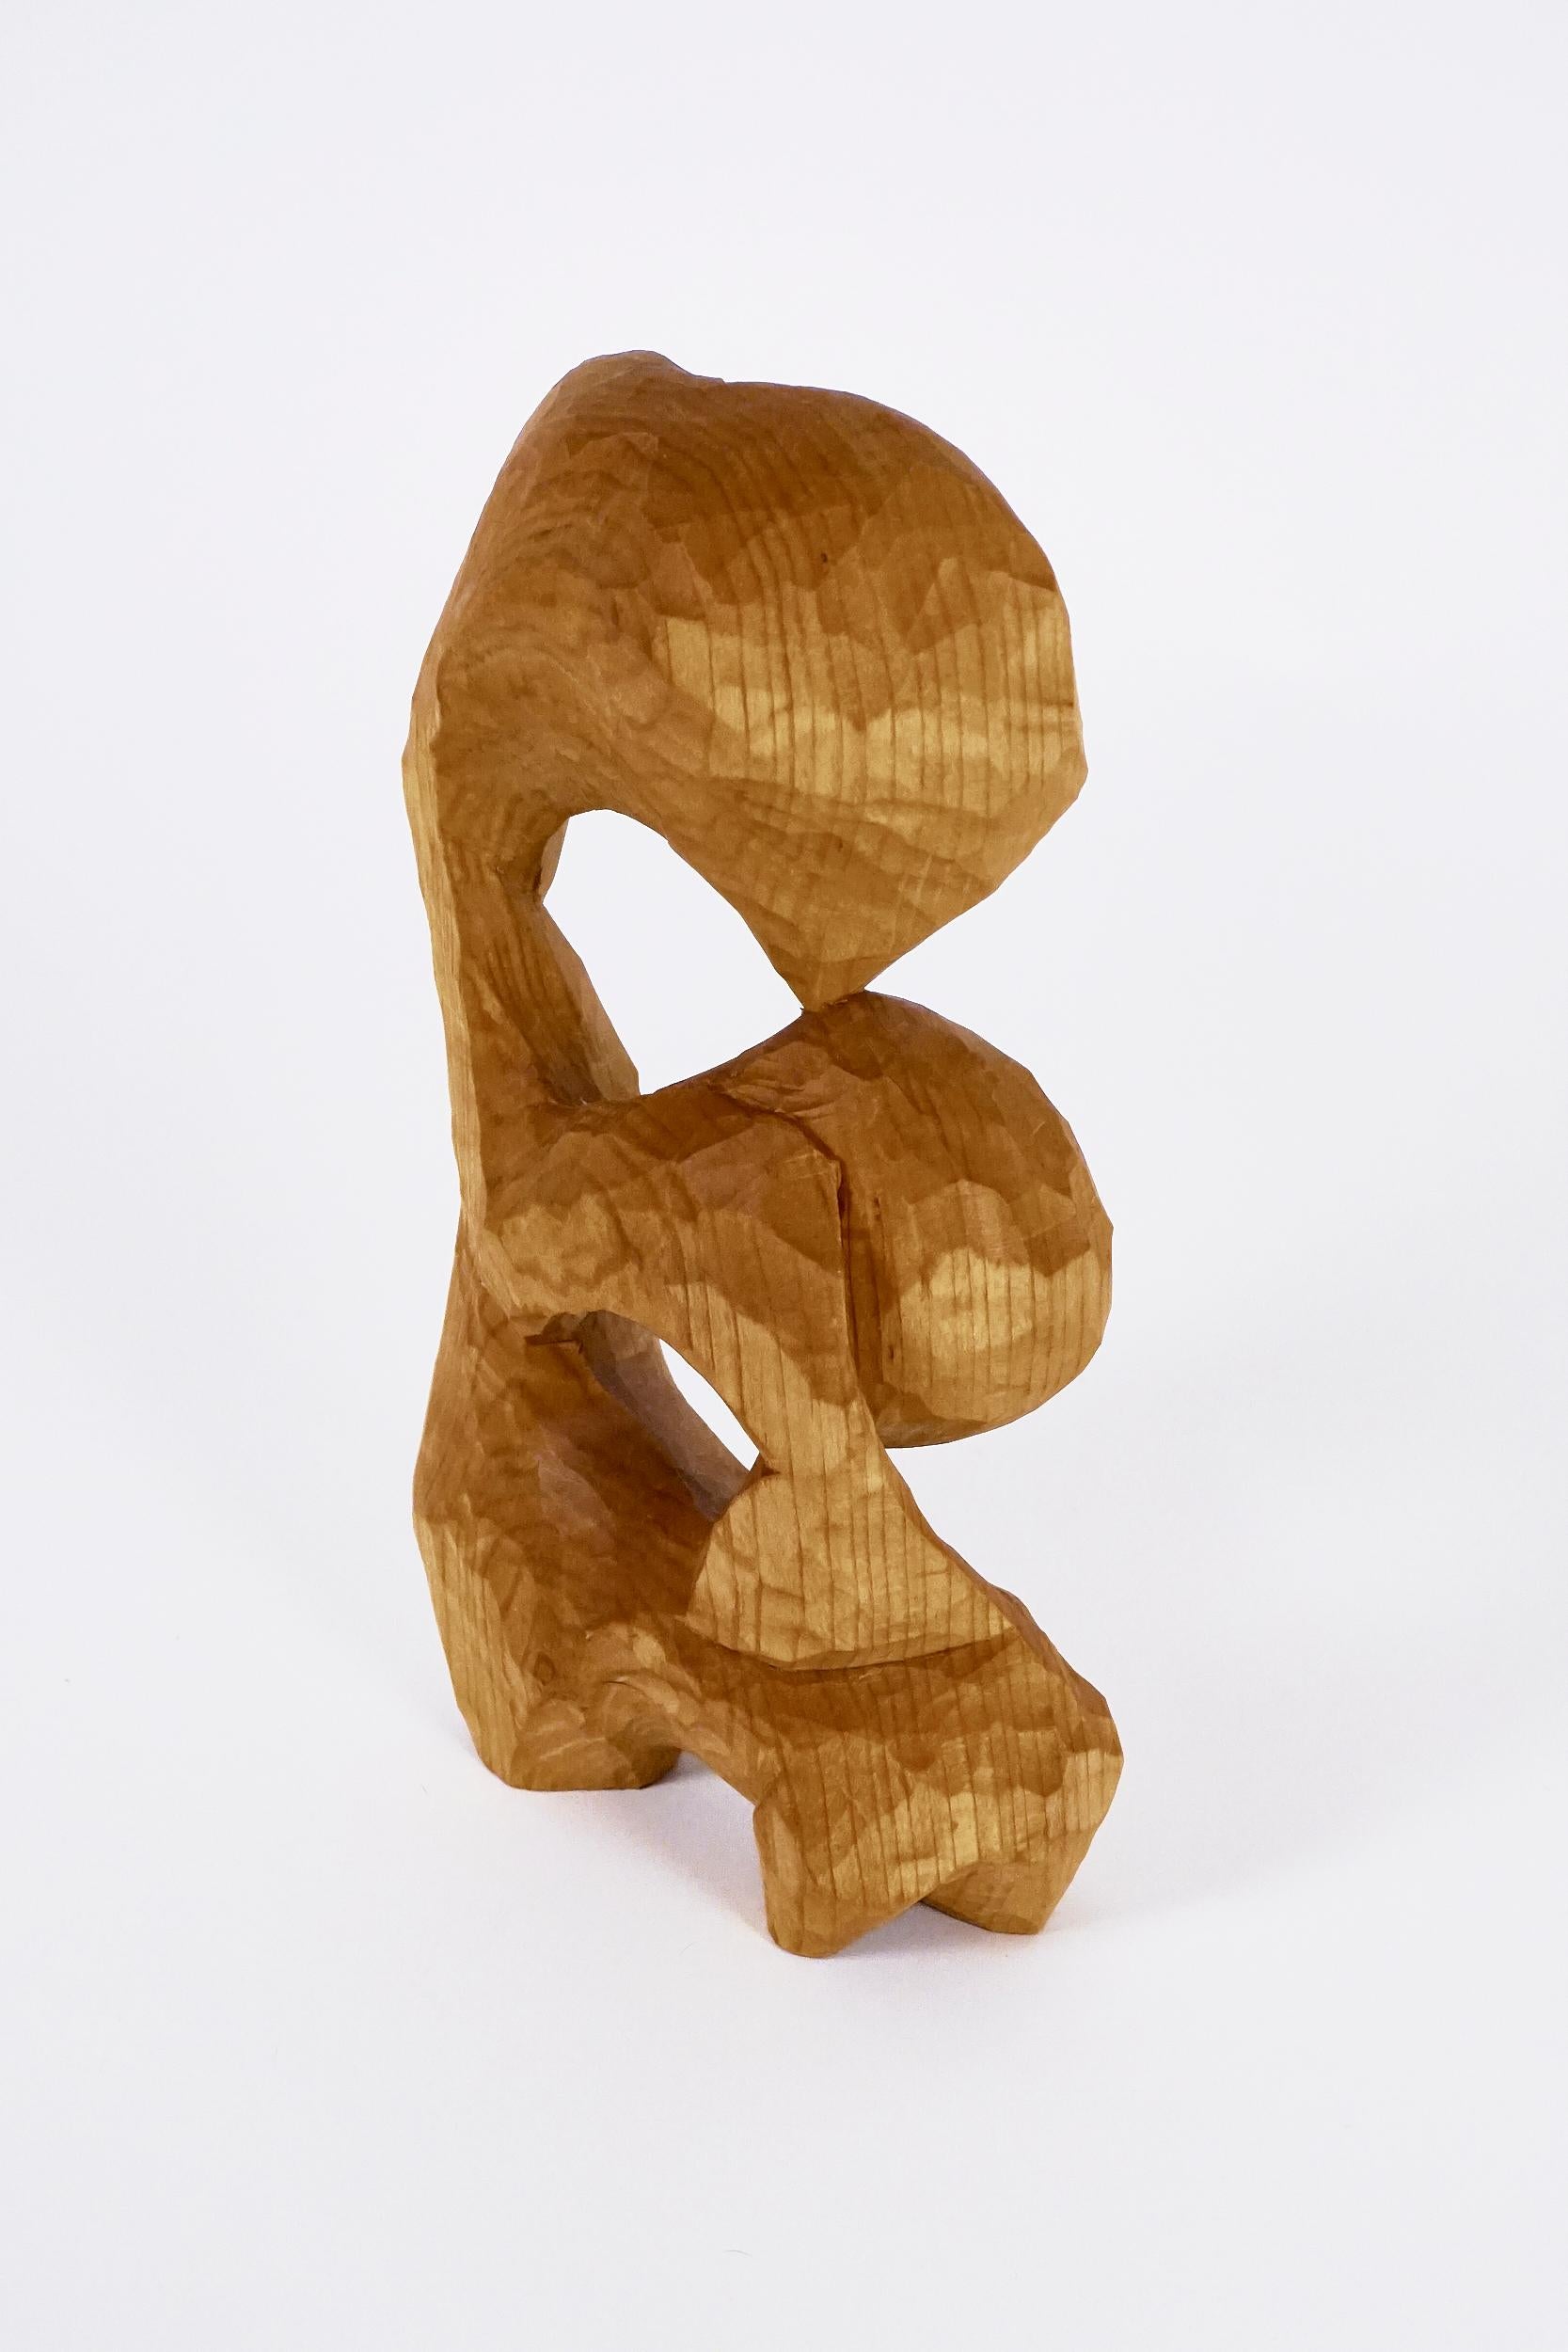 Carved Investigation One, Carved wood sculpture - Sculpture by Jared Abner